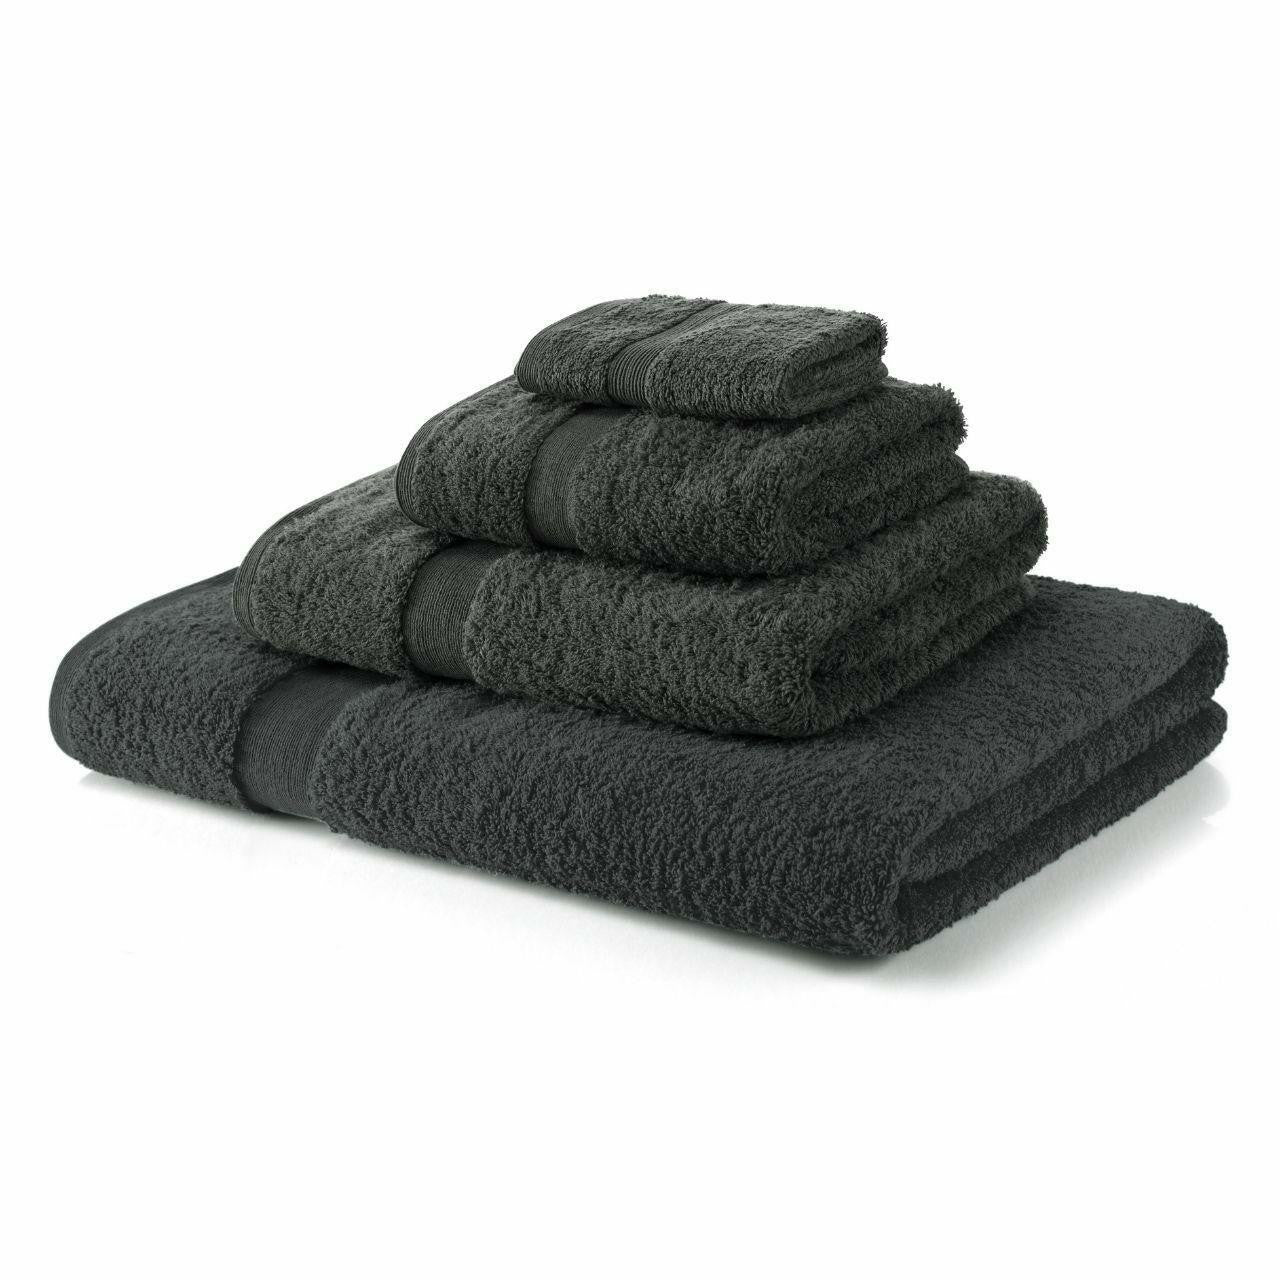 Super Soft 2 Hand Towels, 2 Bath Towels - 600GSM, 4 Piece Towels Bale Set